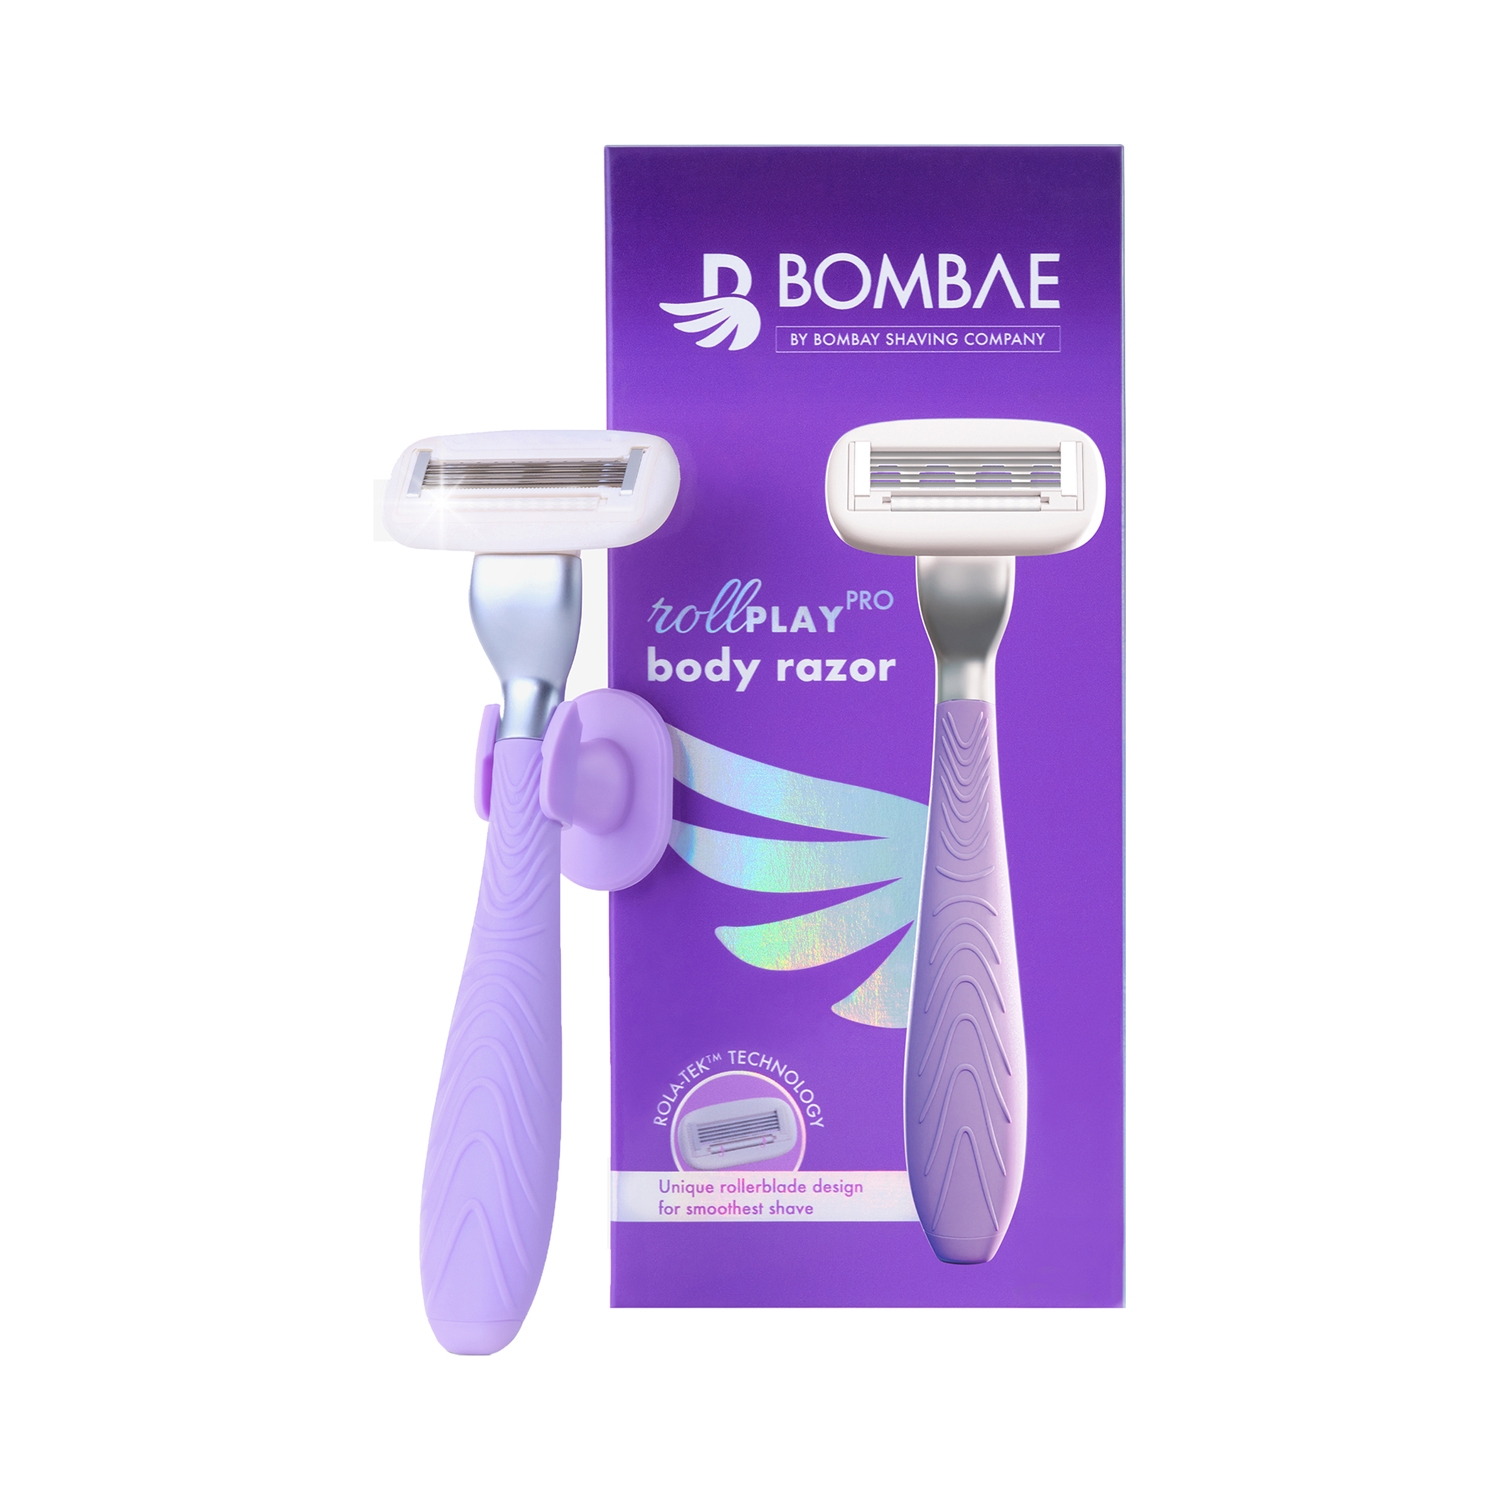 Bombae | Bombae Rollplay Pro Body Razor With Rolatek Roller - Purple, White